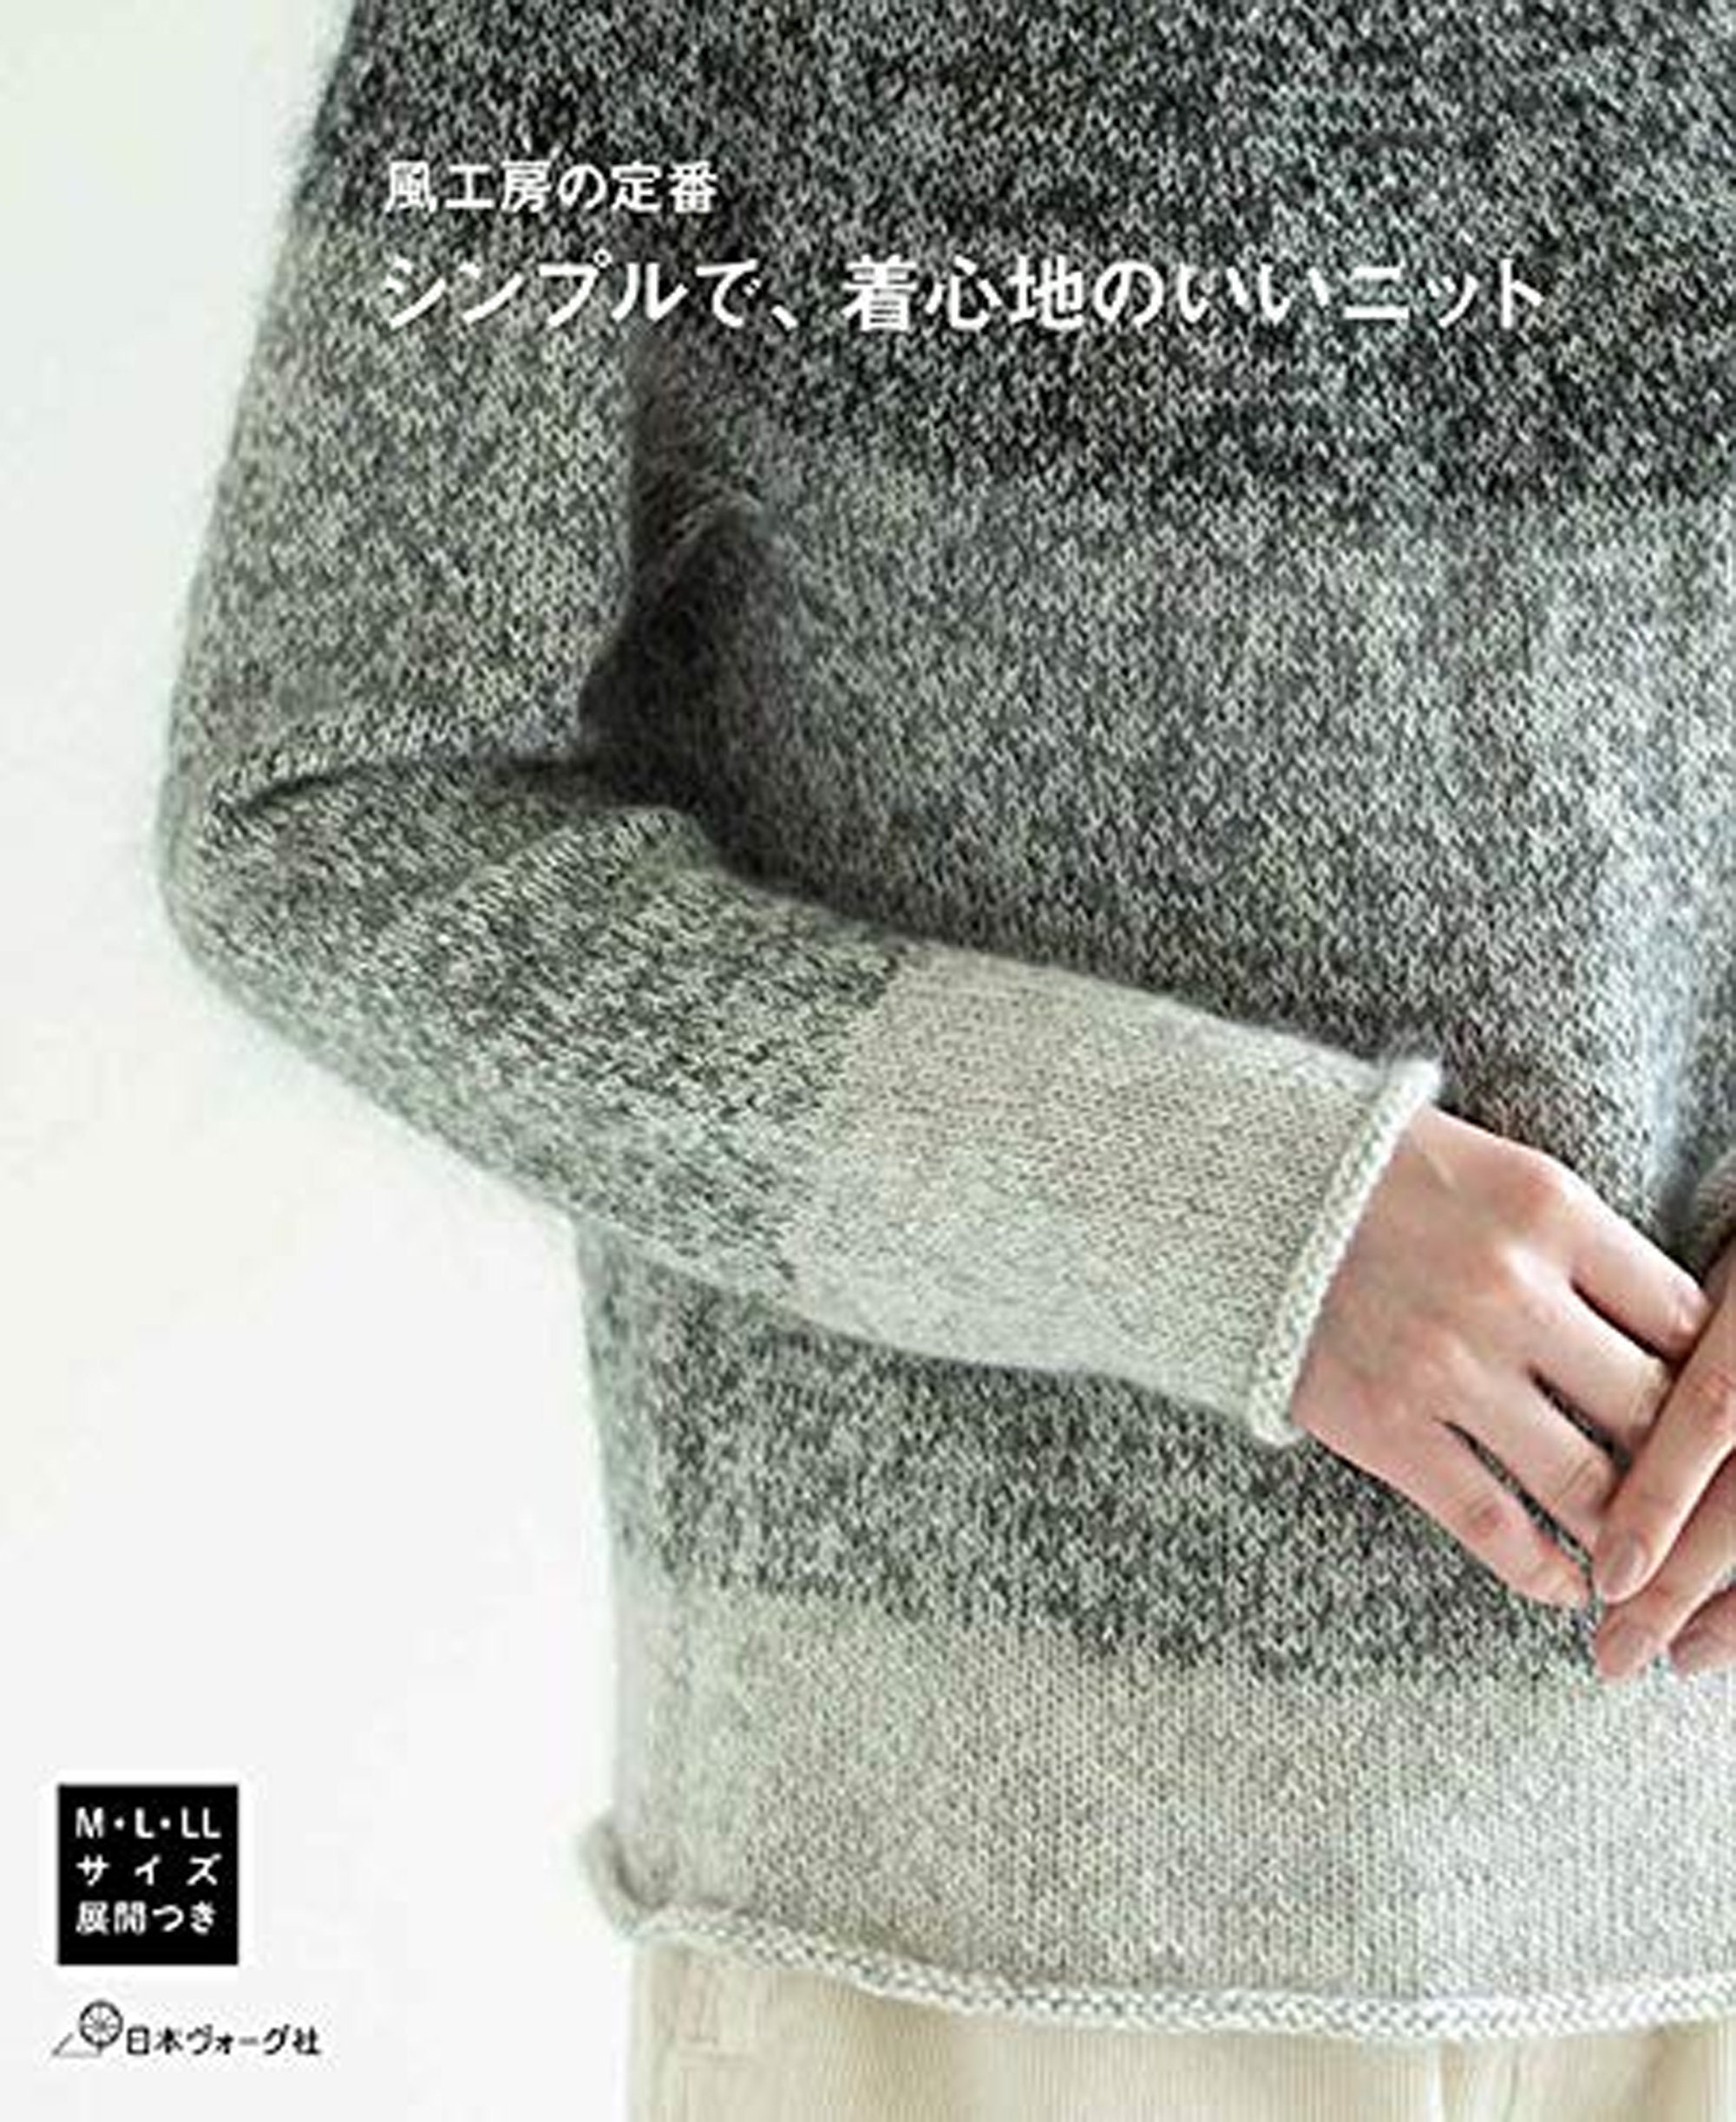 Kazekobo's Simple and Comfortable Knitwear Japanese Craft | Etsy